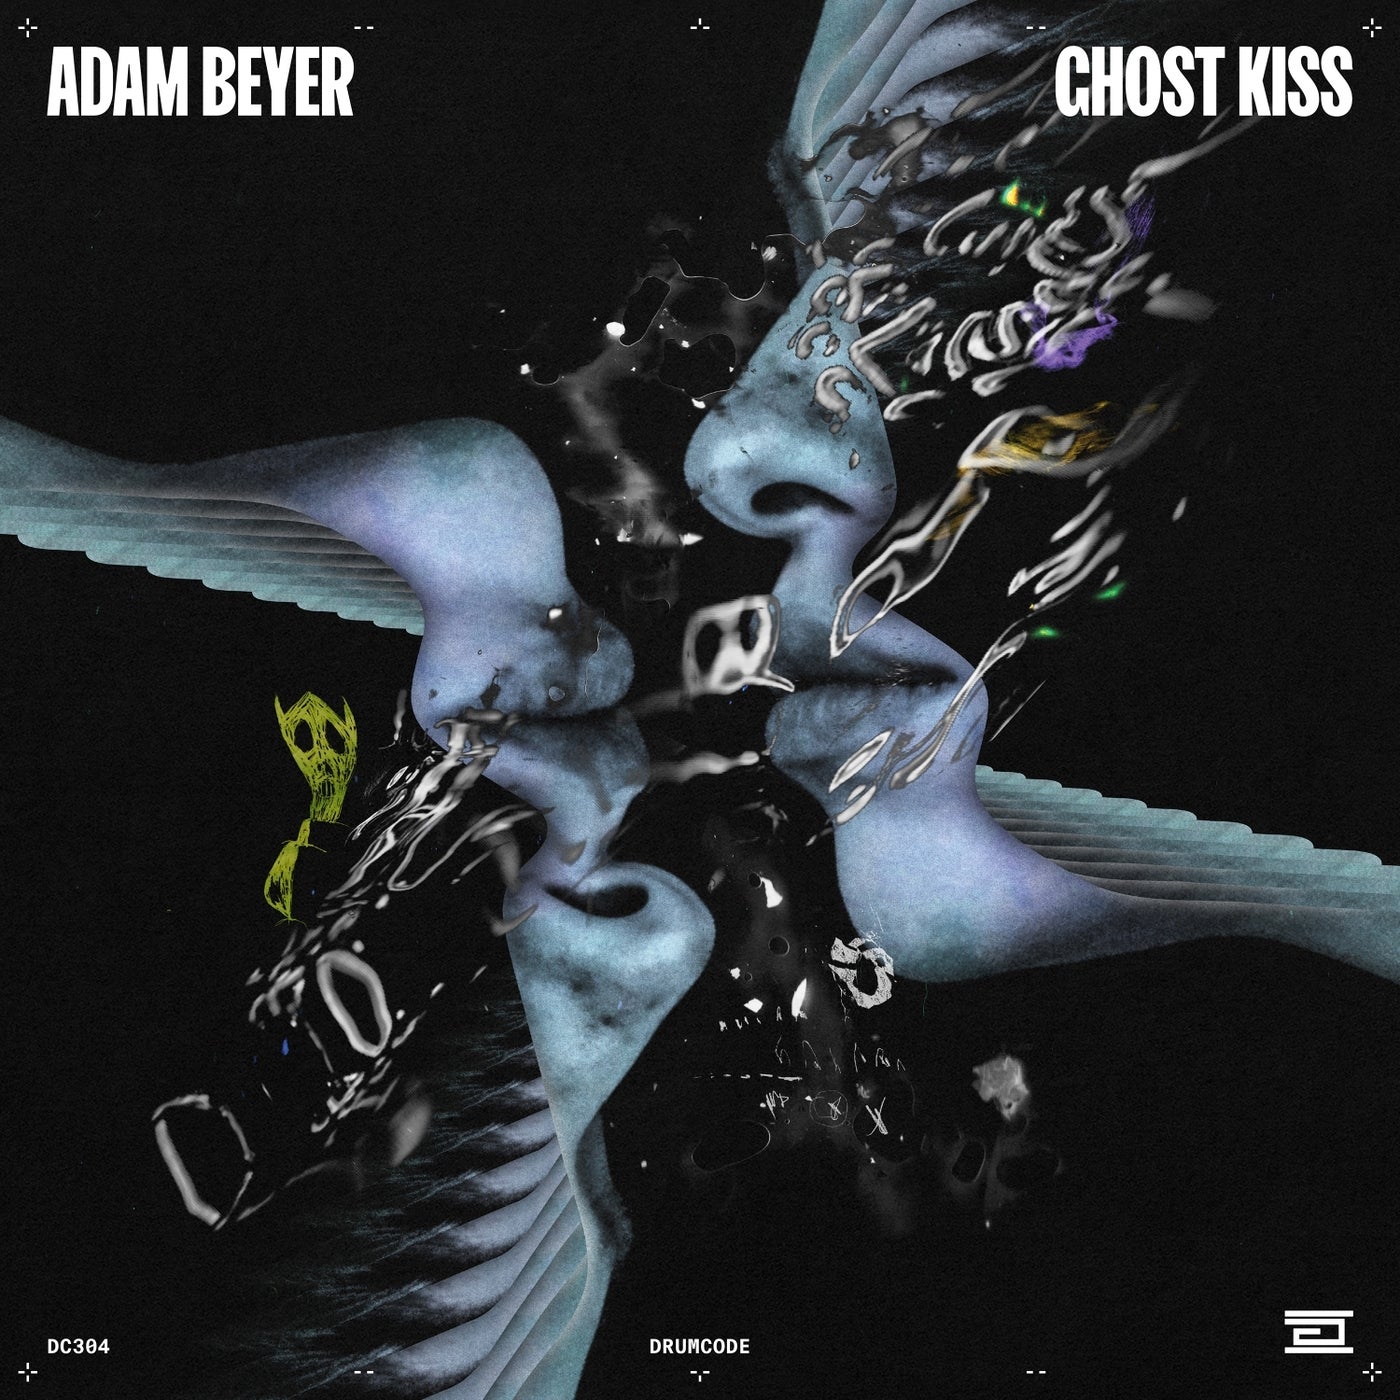 image cover: Adam Beyer - Ghost Kiss on Drumcode